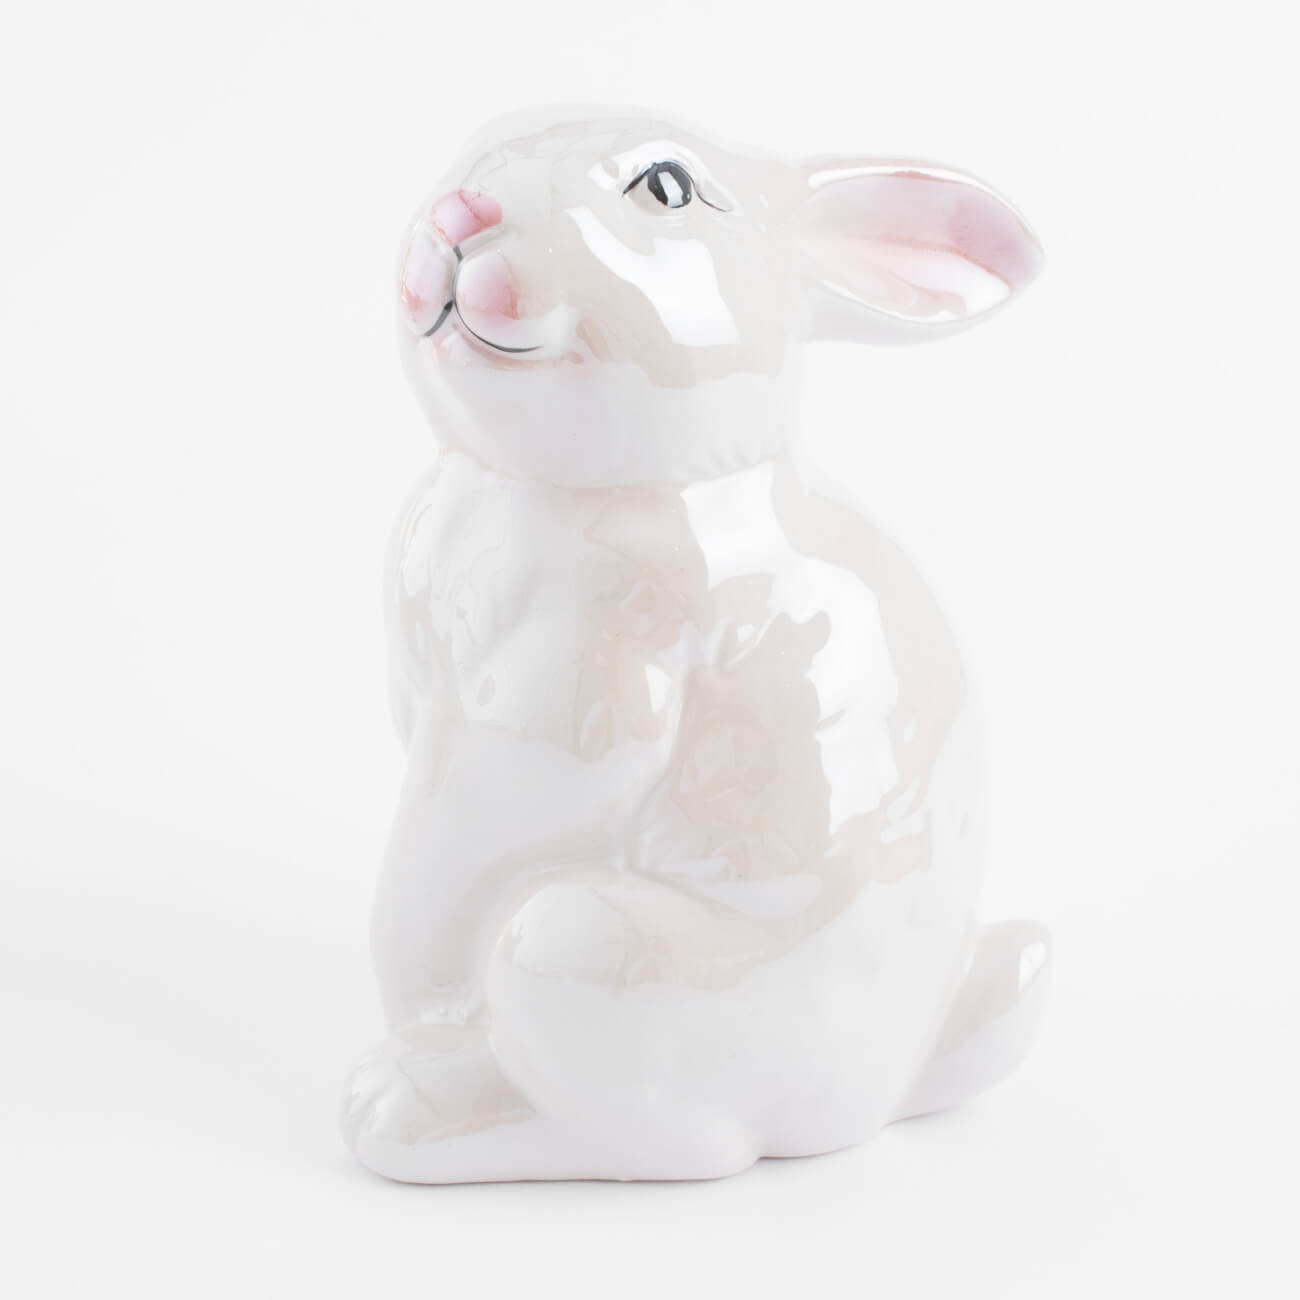 Статуэтка, 16 см, керамика, молочная, перламутр, Кролик, Easter статуэтка оскар керамика